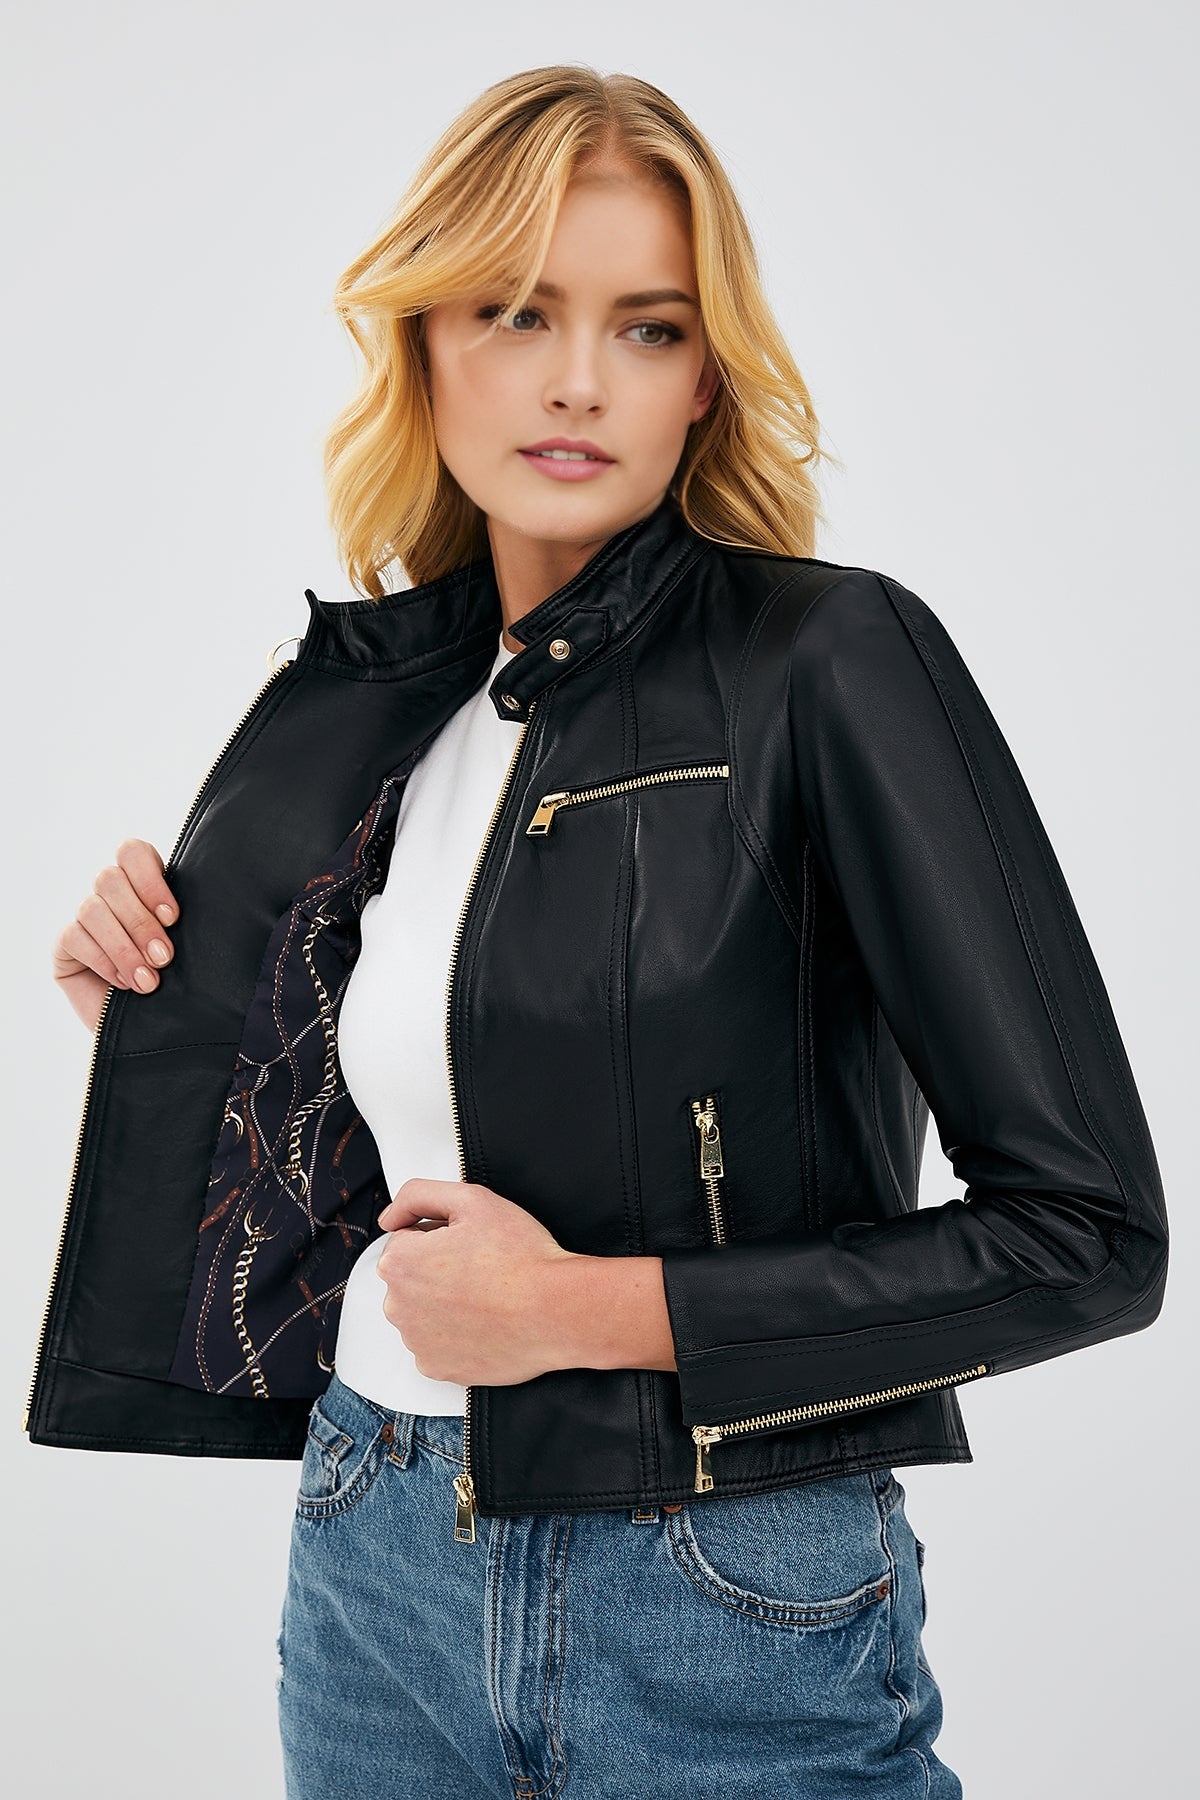 Alexa Women's Black Leather Jacket